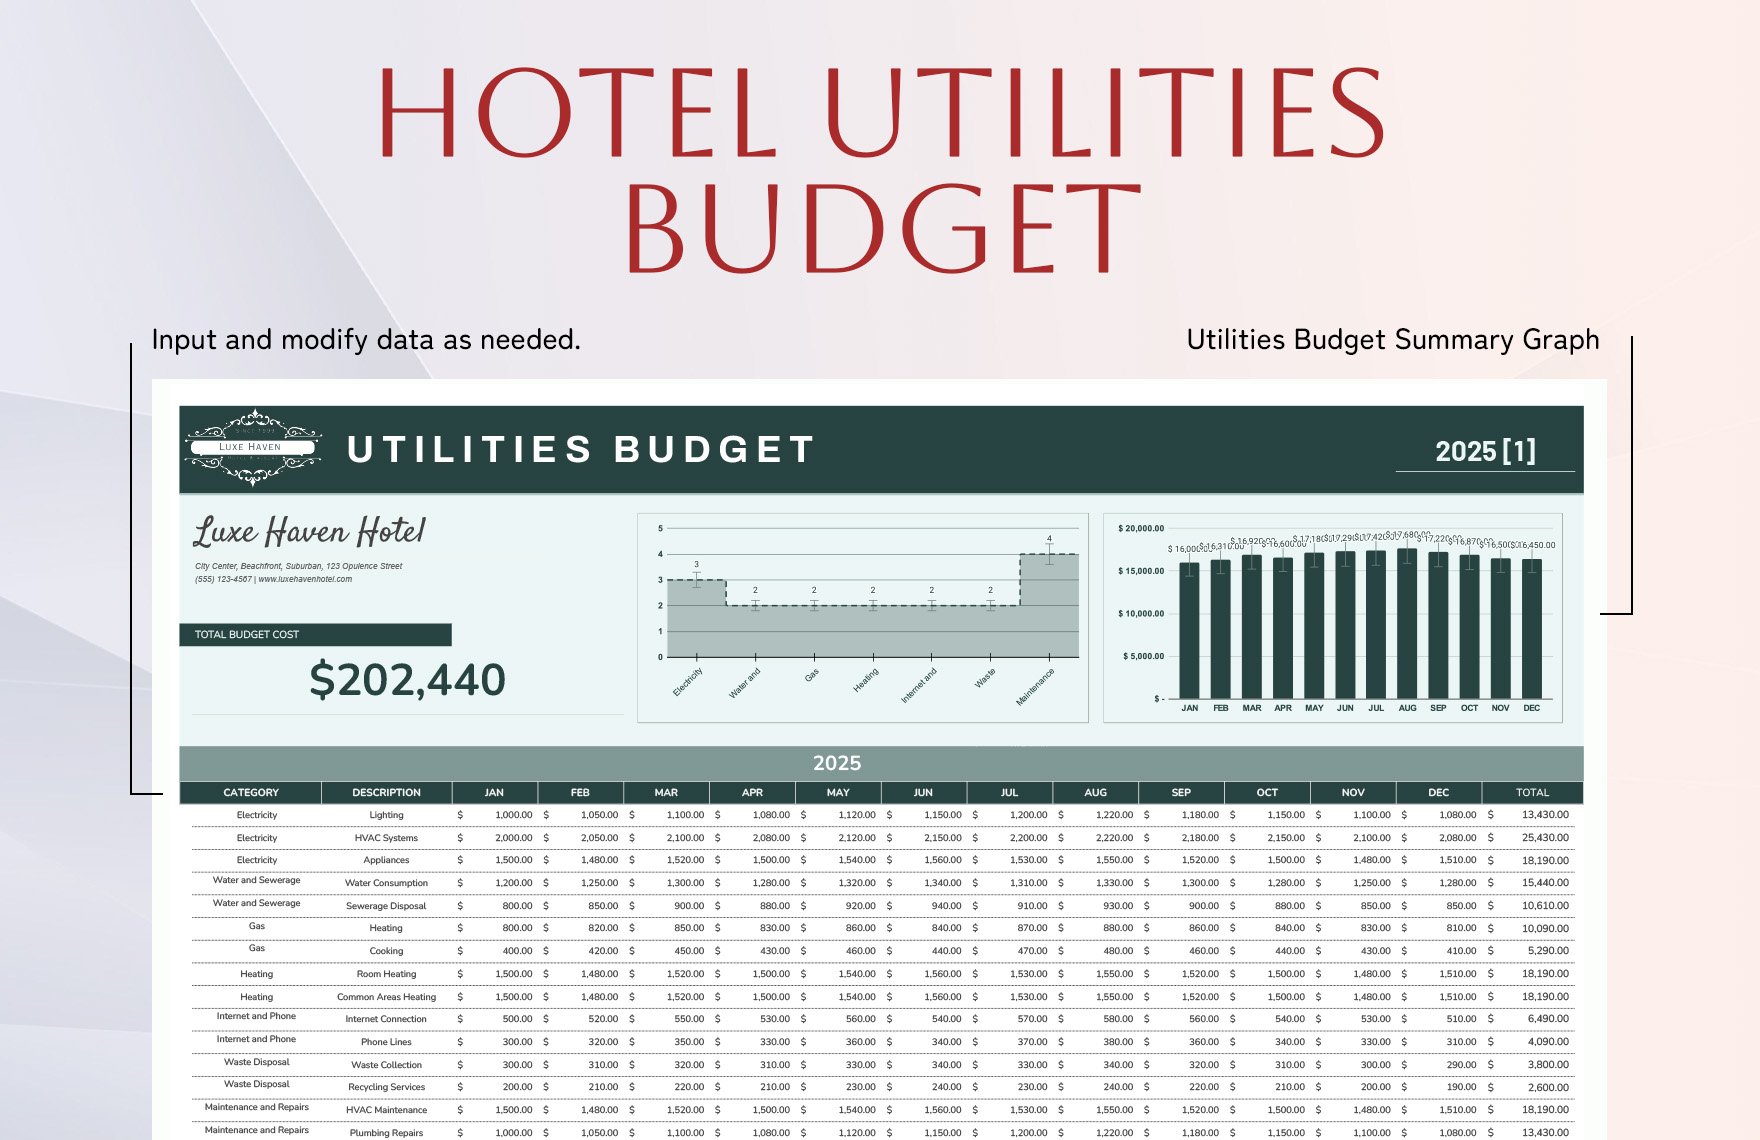 Hotel Utilities Budget Template